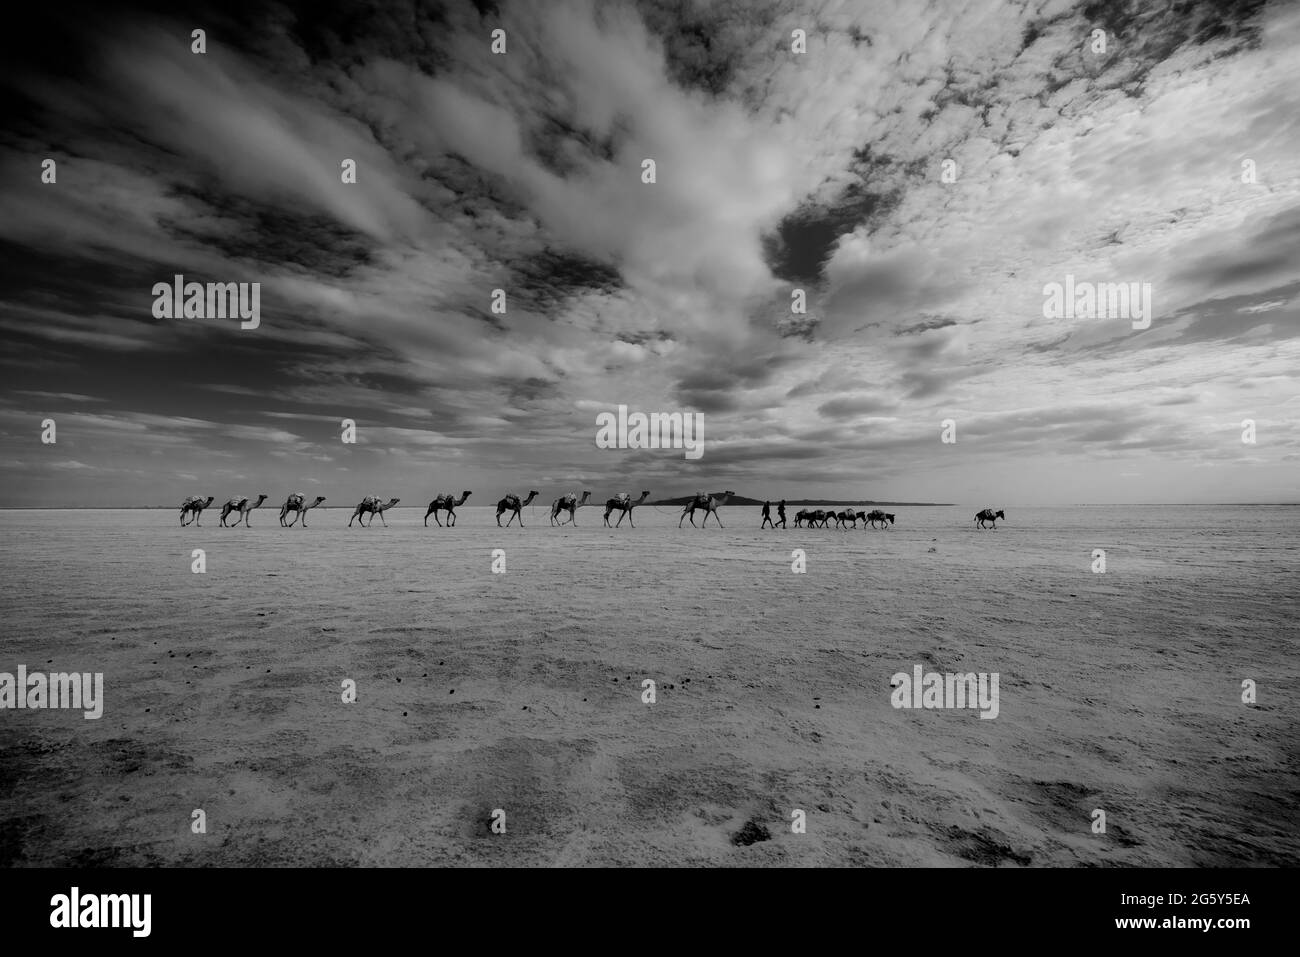 Cammelli caravan sul lago karum in bianco e nero Foto Stock